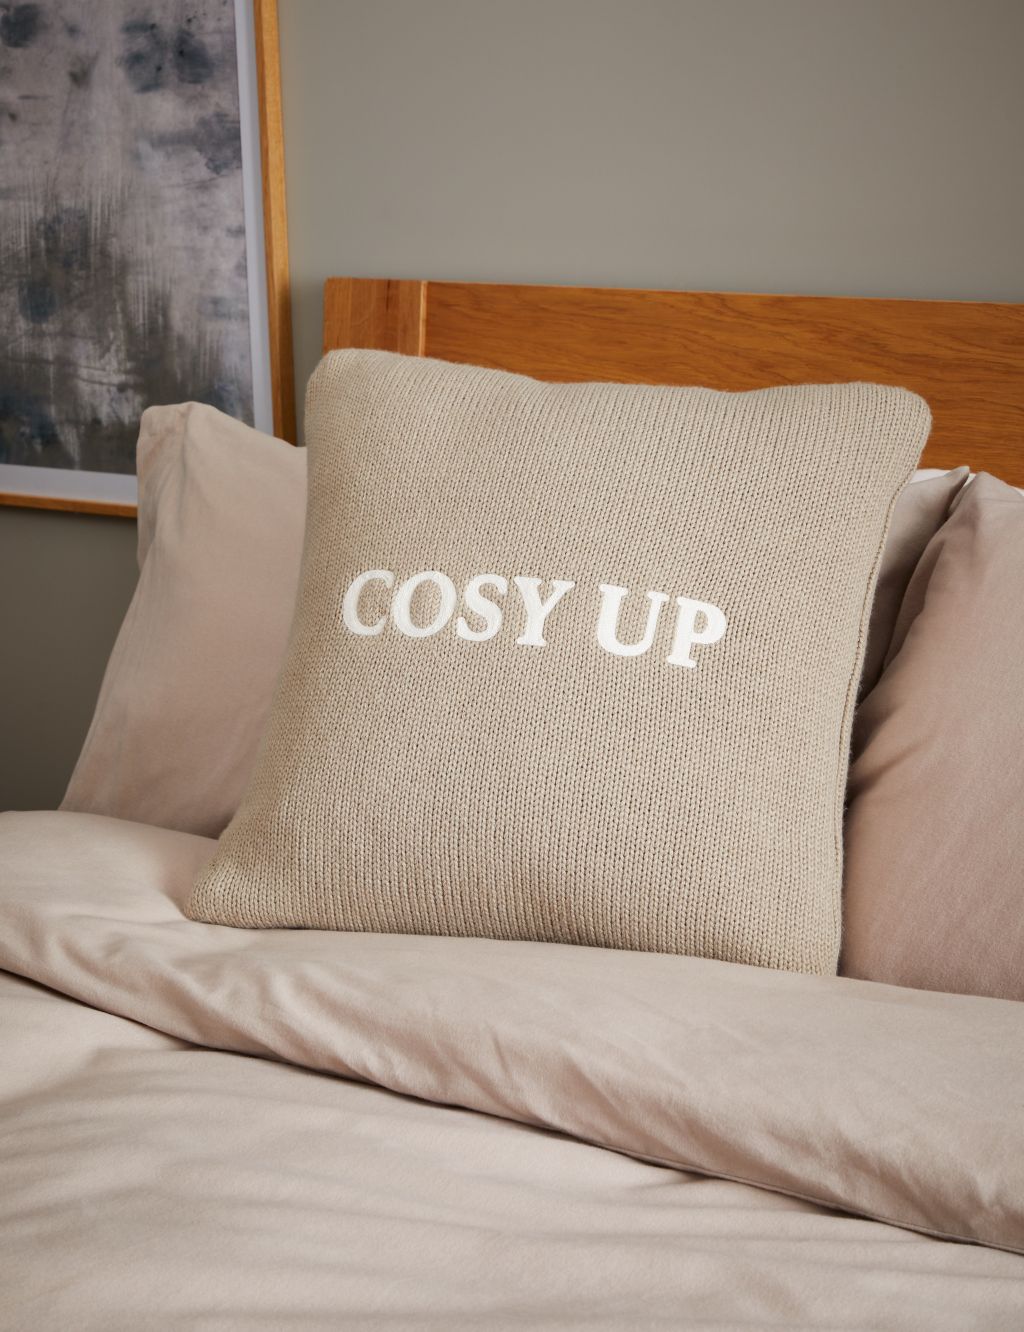 Cosy Up Slogan Cushion image 7